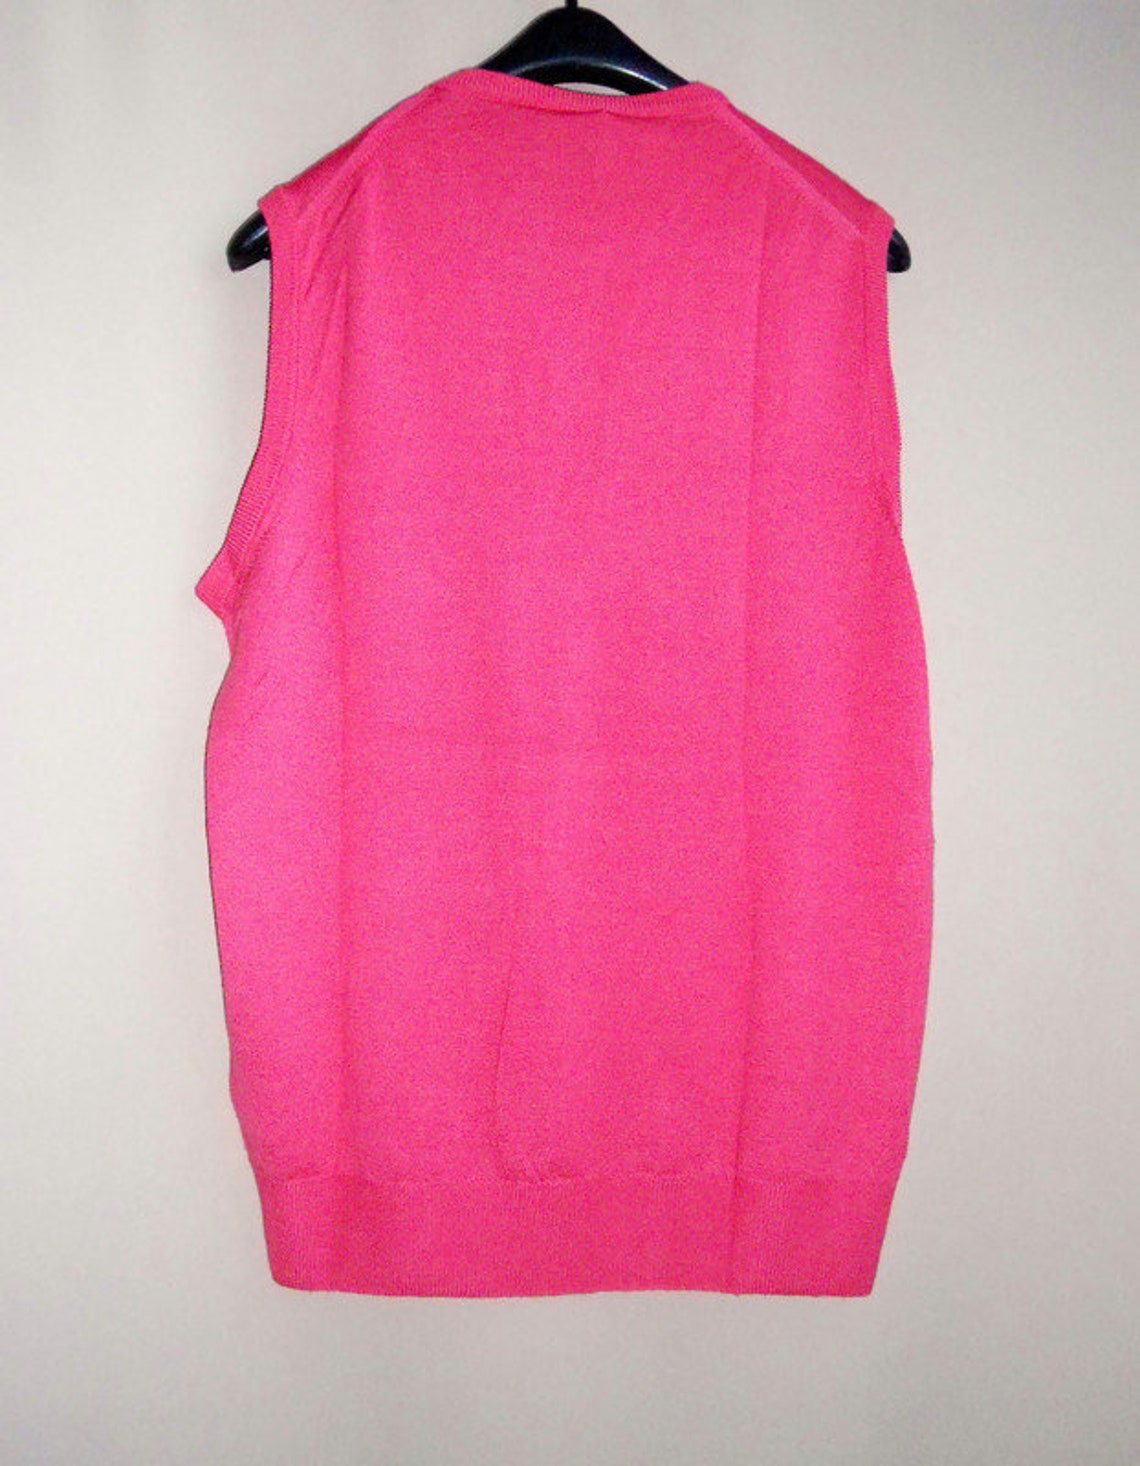 Sleeveless wool sweater men's vest Vintage Italy pink | Etsy